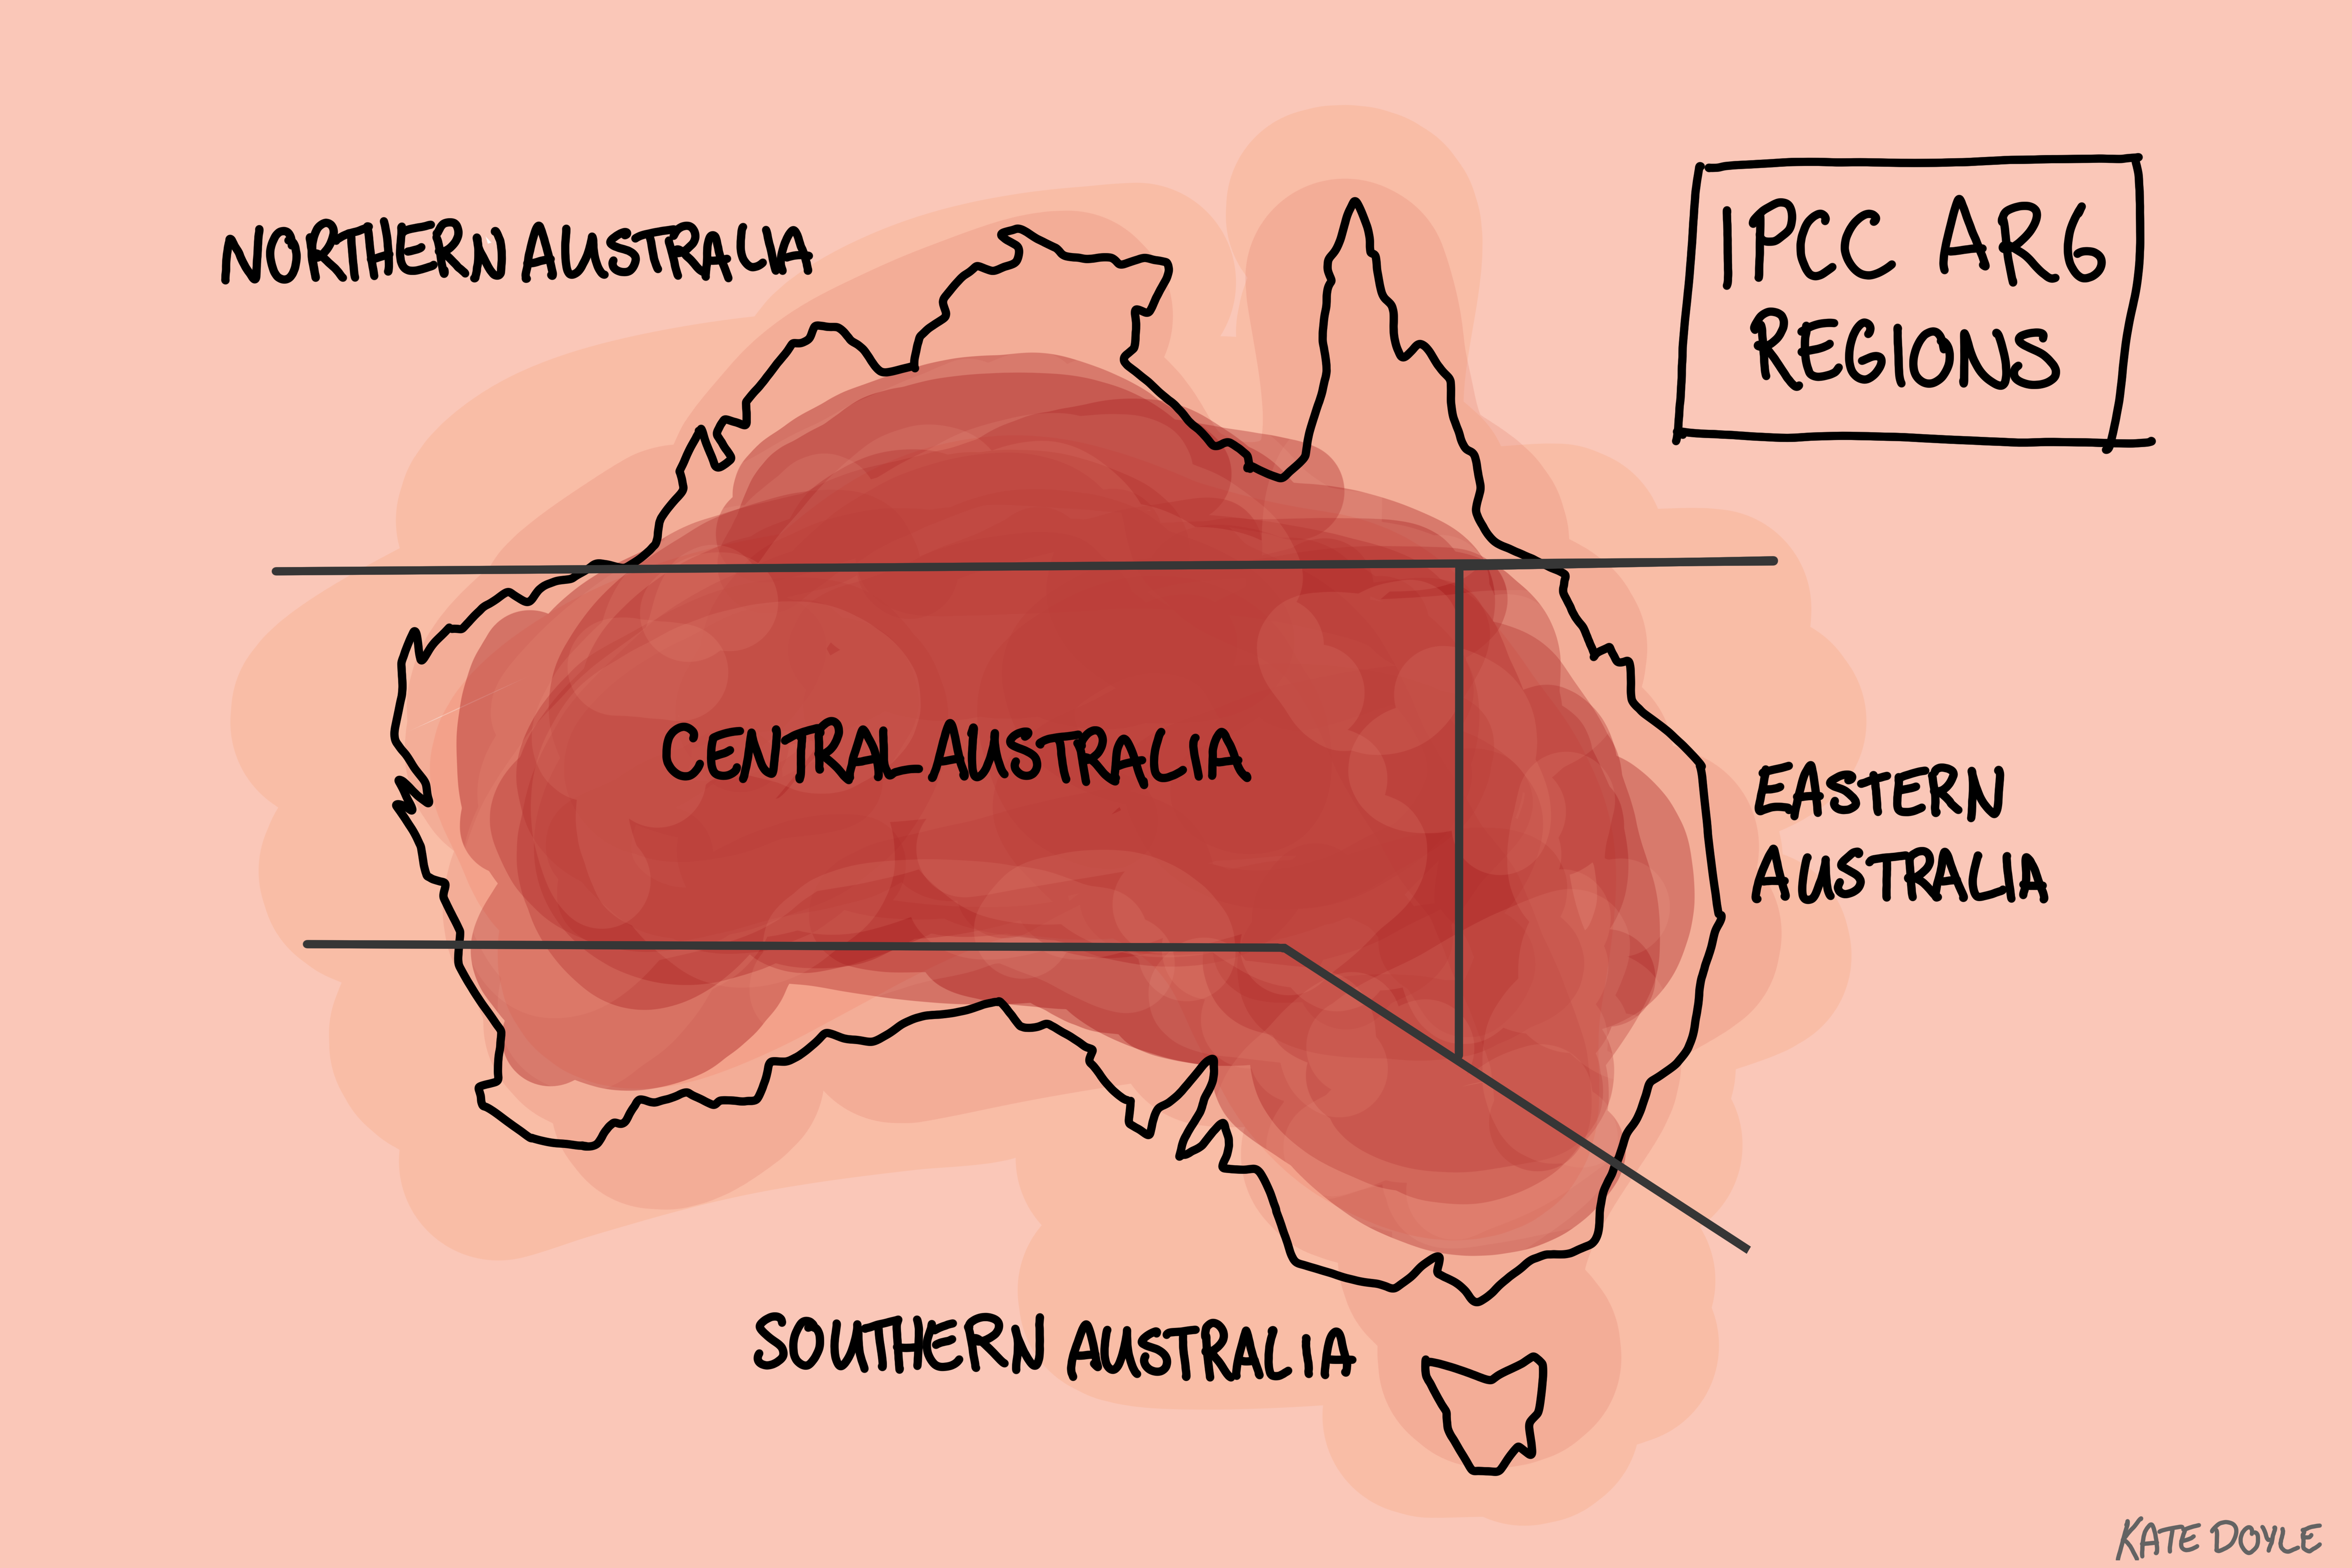 IPCC AR6 MAP